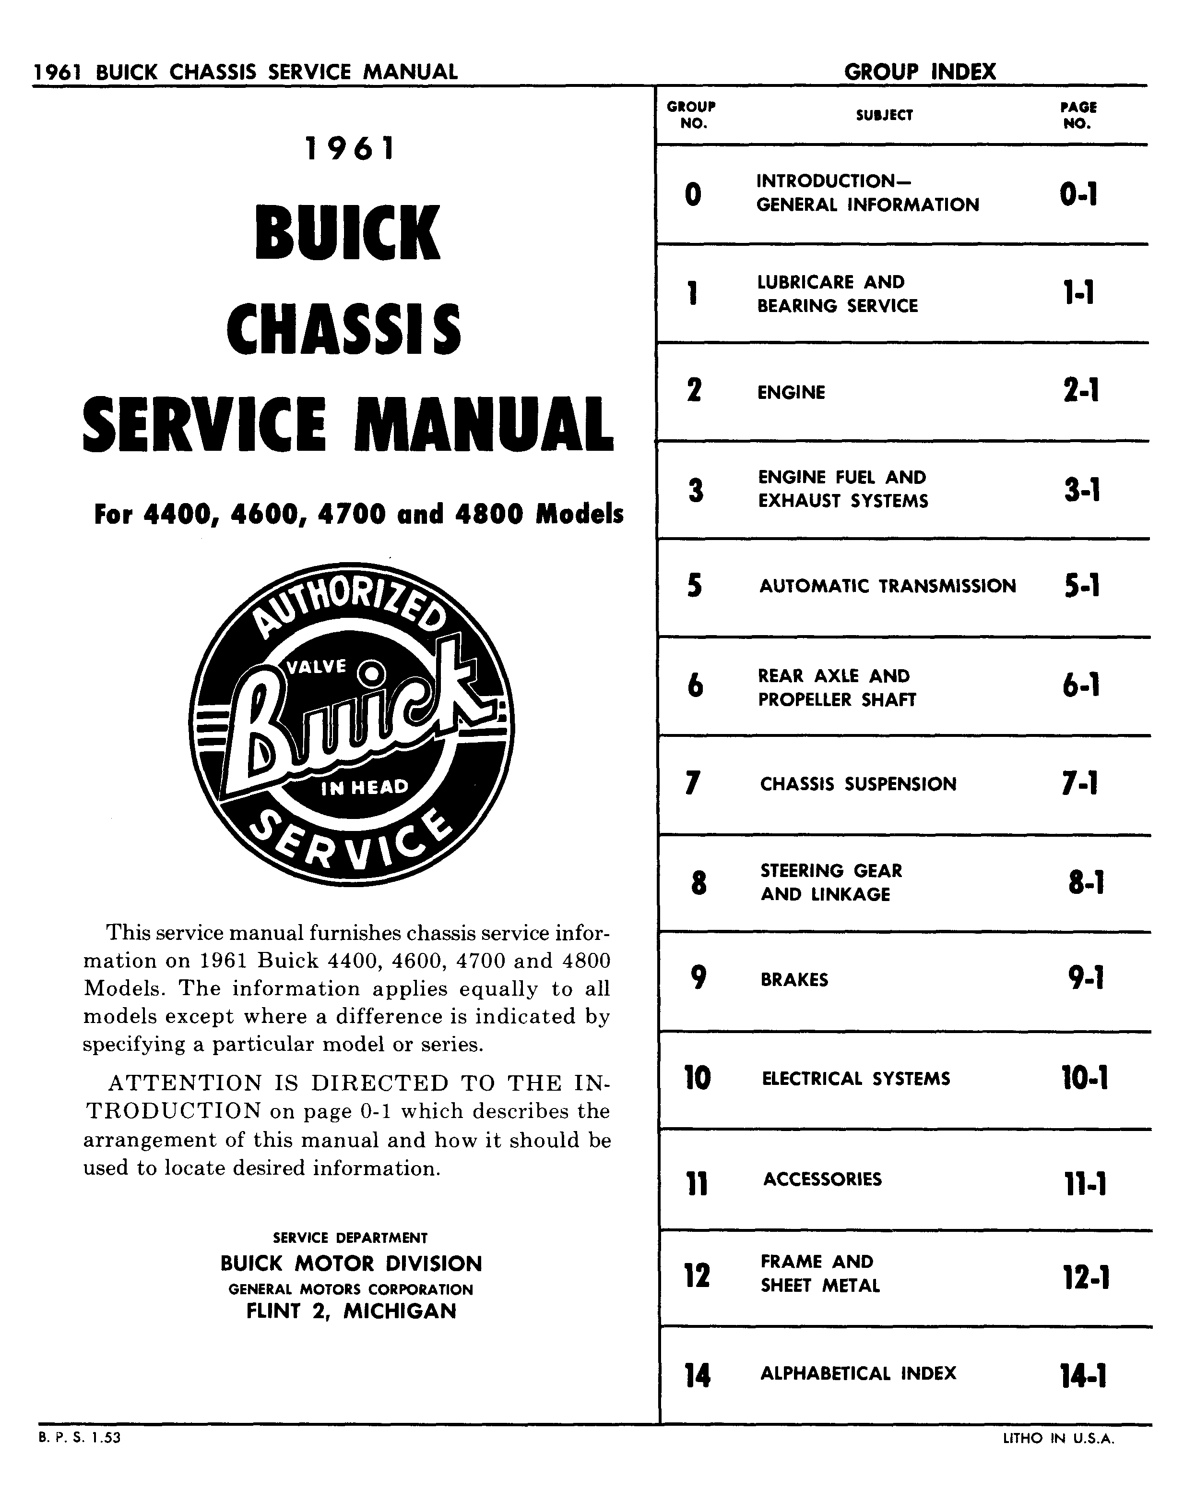 n_01 1961 Buick Shop Manual - Gen Information-002-002.jpg